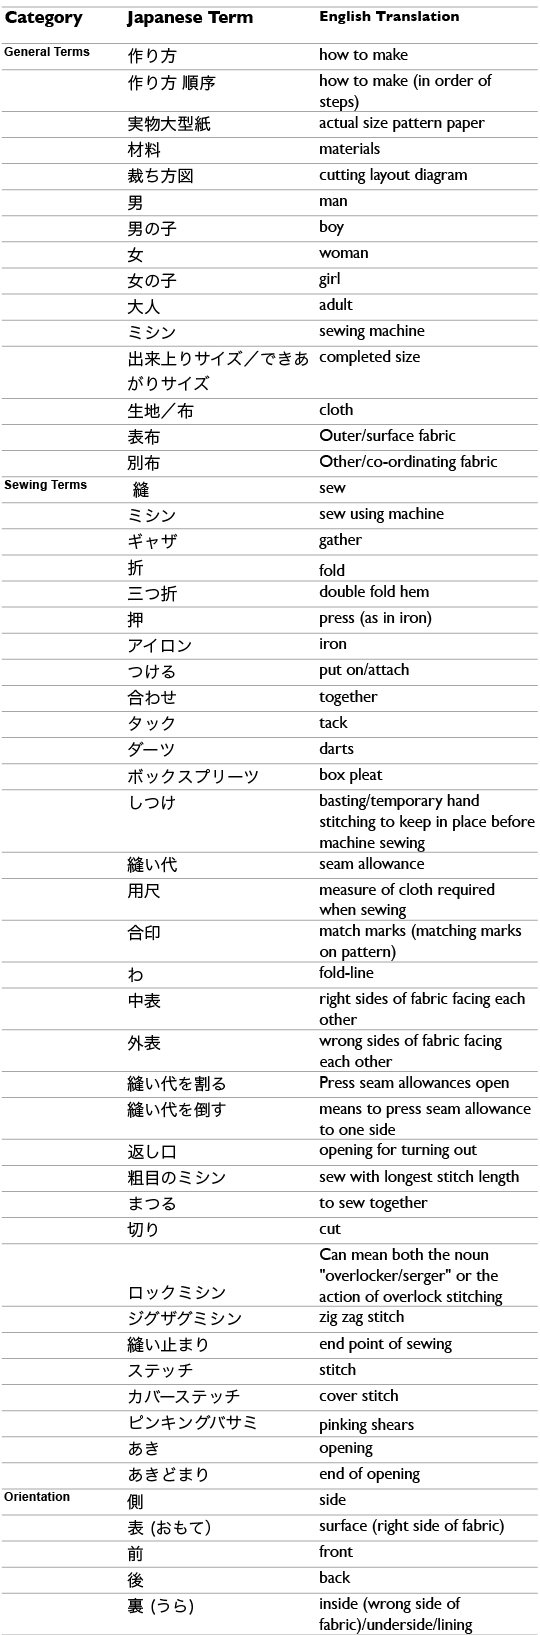 japanese to english dictionary translation